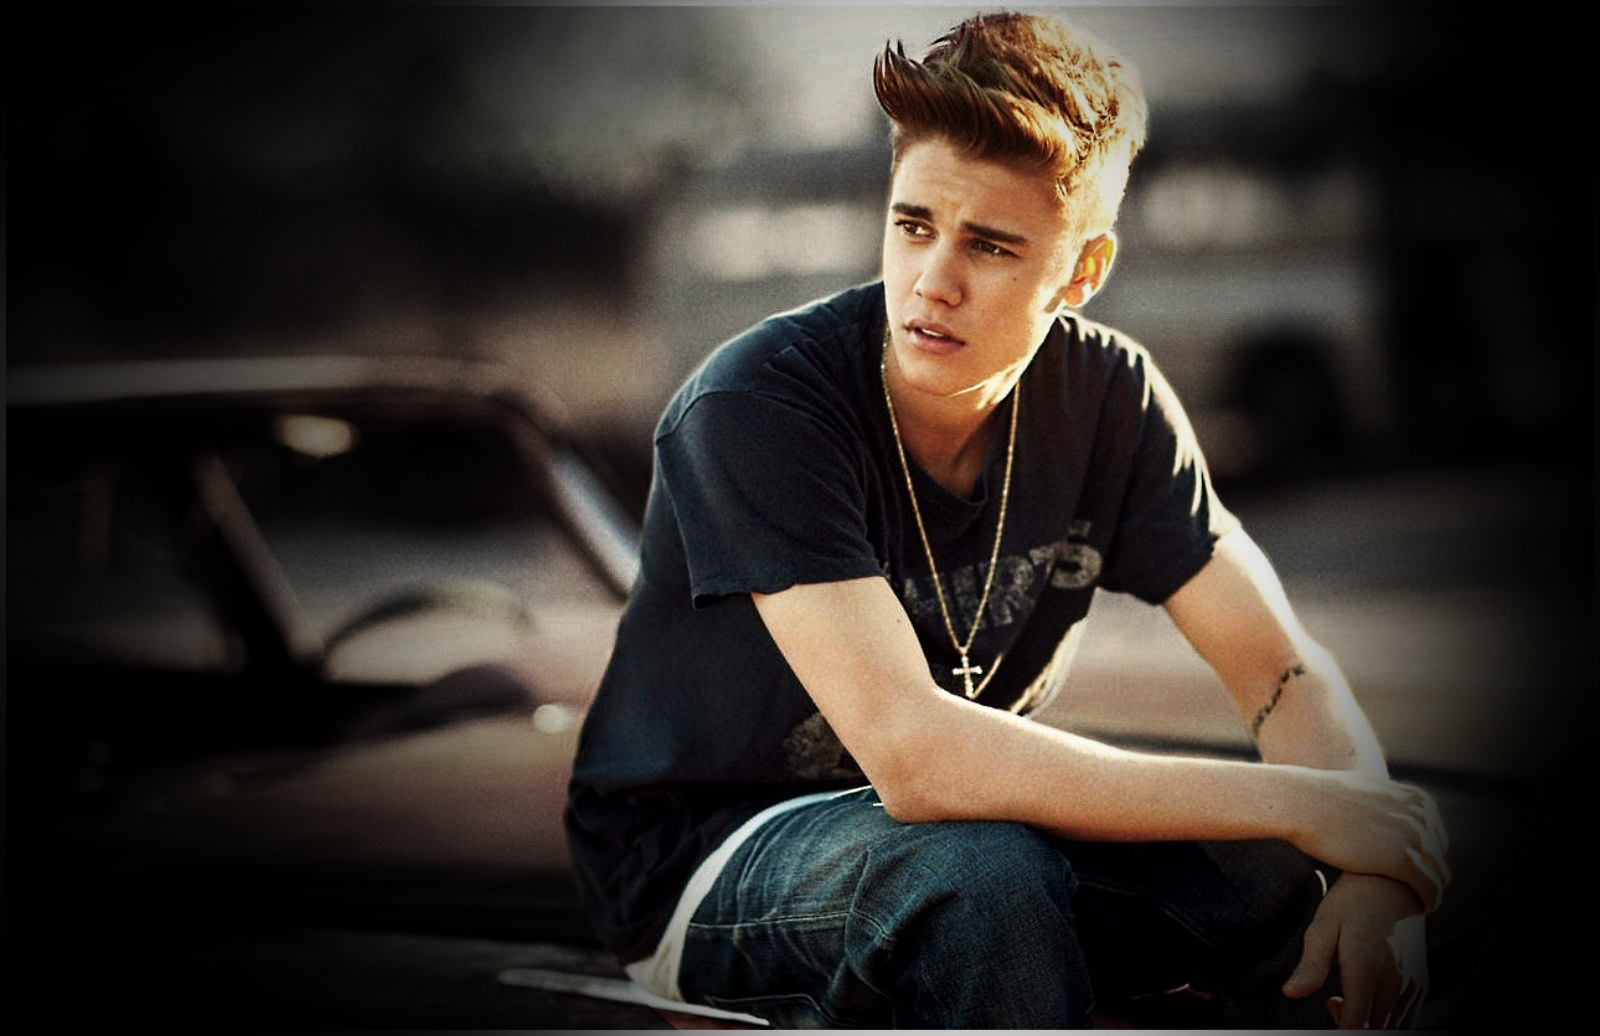 Justin Bieber Wallpaper HD Background Image Pics Photos